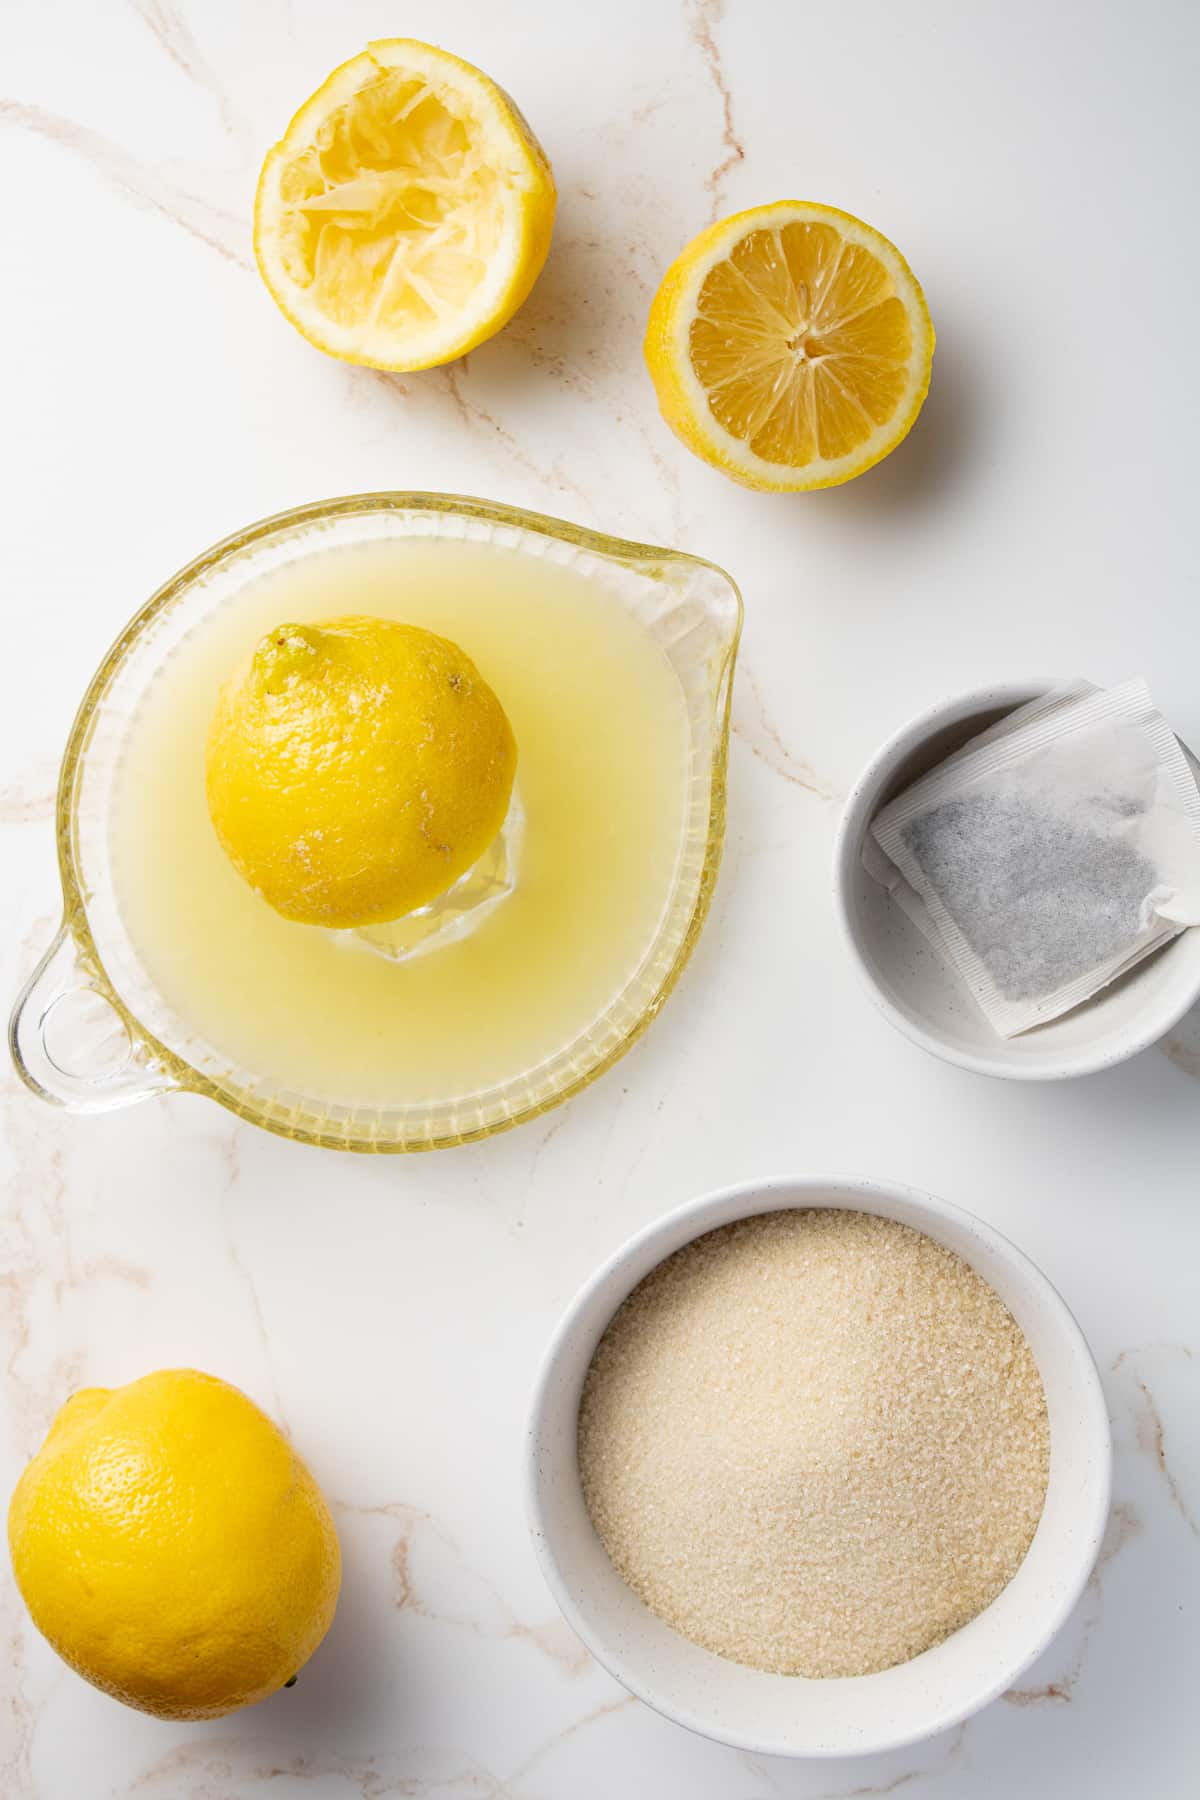 Iced tea tea lemonade ingredients on a counter.